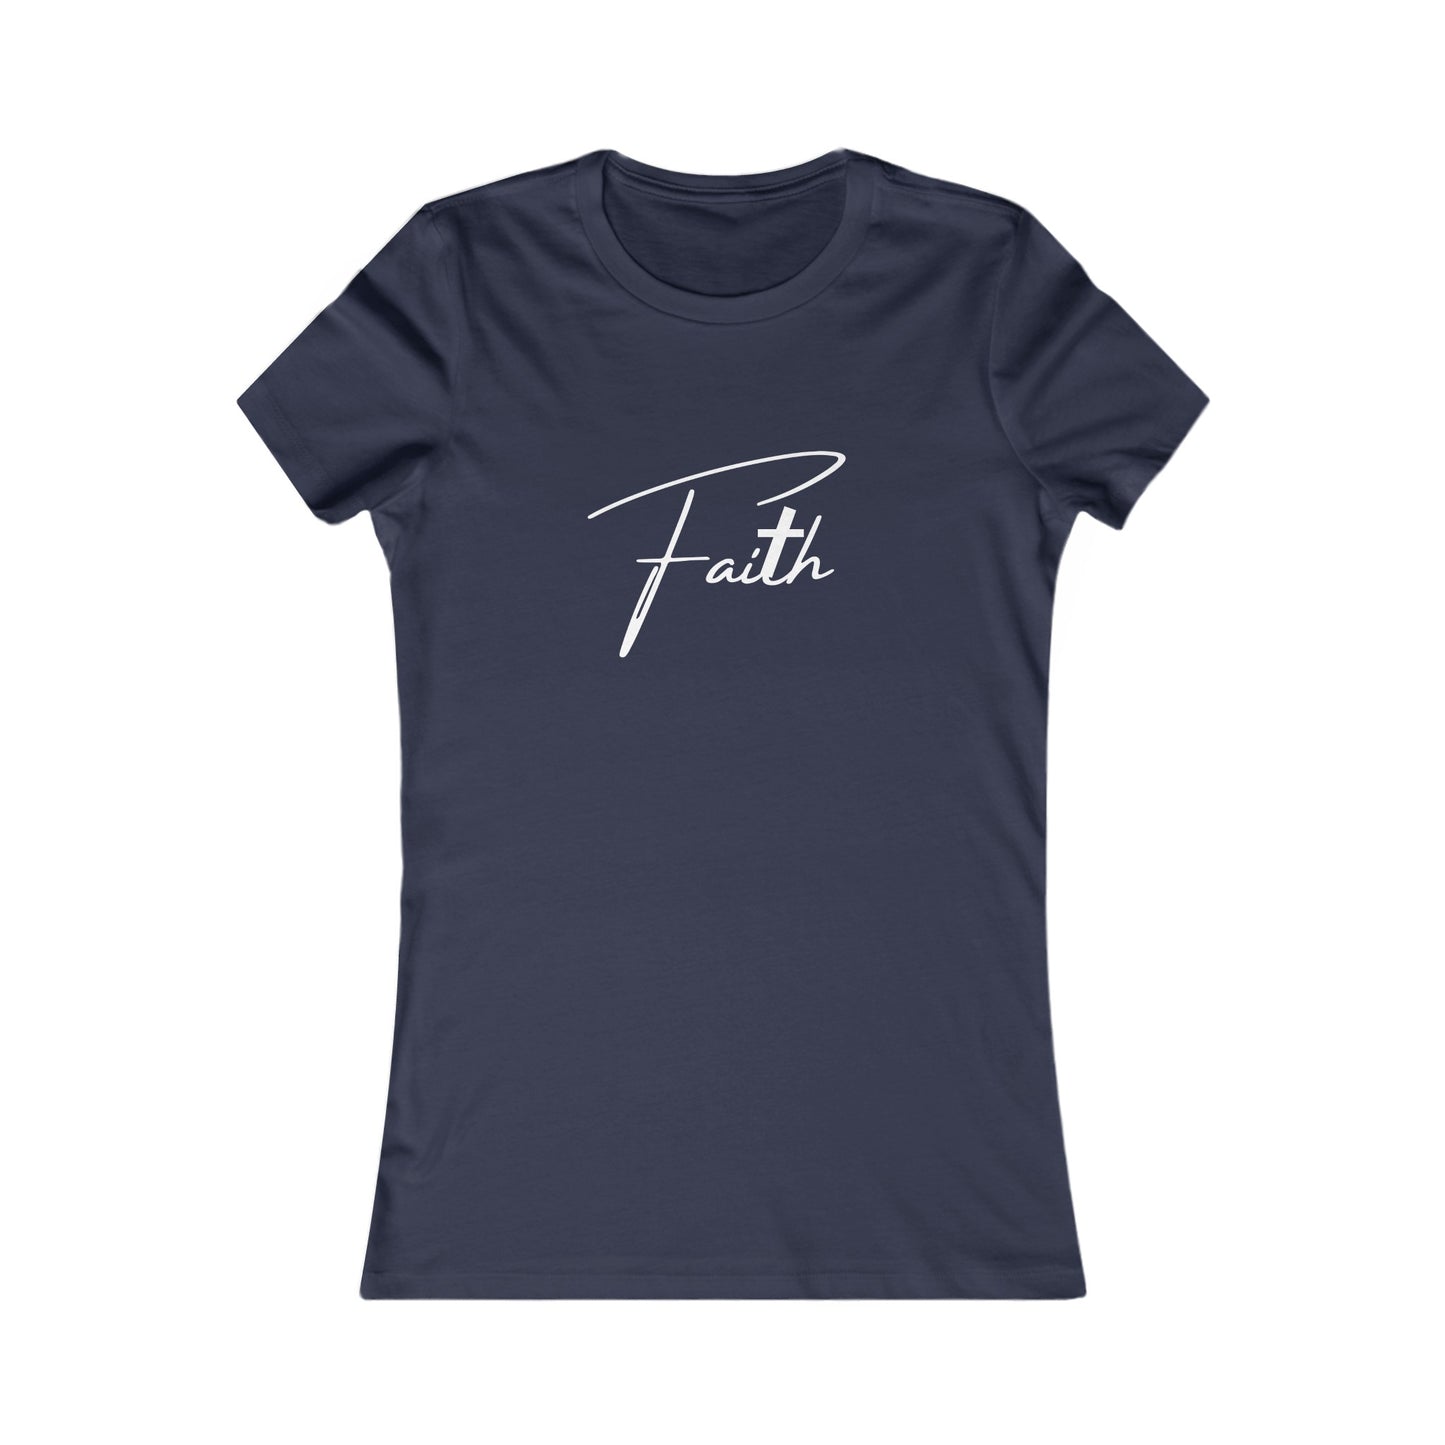 Cross-ed T Faith Women's Tshirt